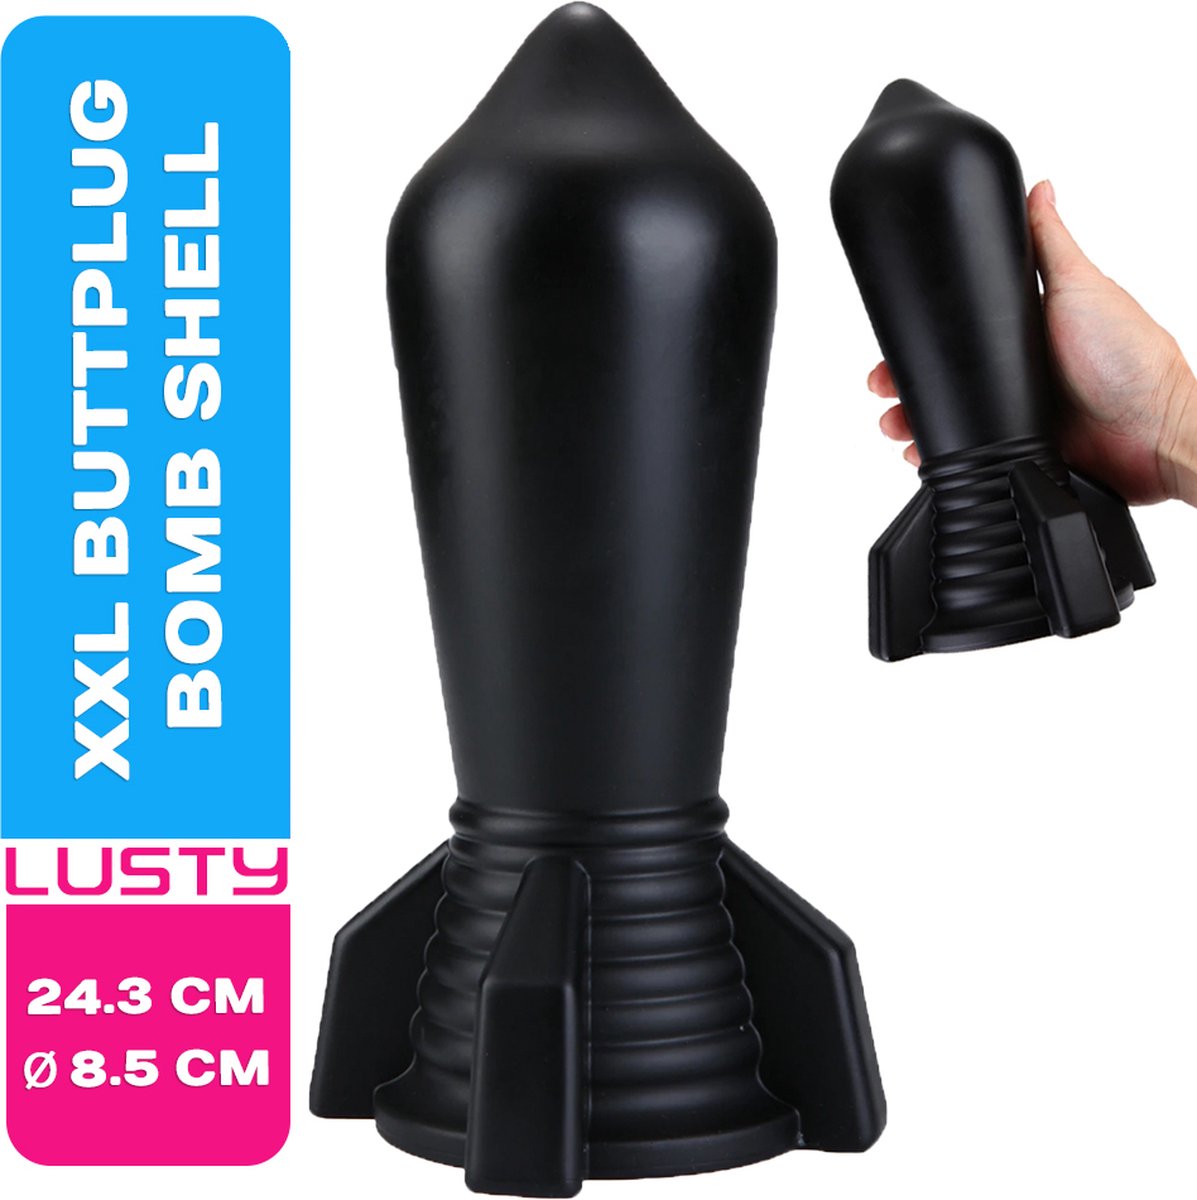 Lusty XXL Buttplug Bomb Shell - 24 x 8.5 cm - Grote Butt Plug - XL Anaalplug - PVC - Met Zuignap - Anaal Toys - Anal Sextoys